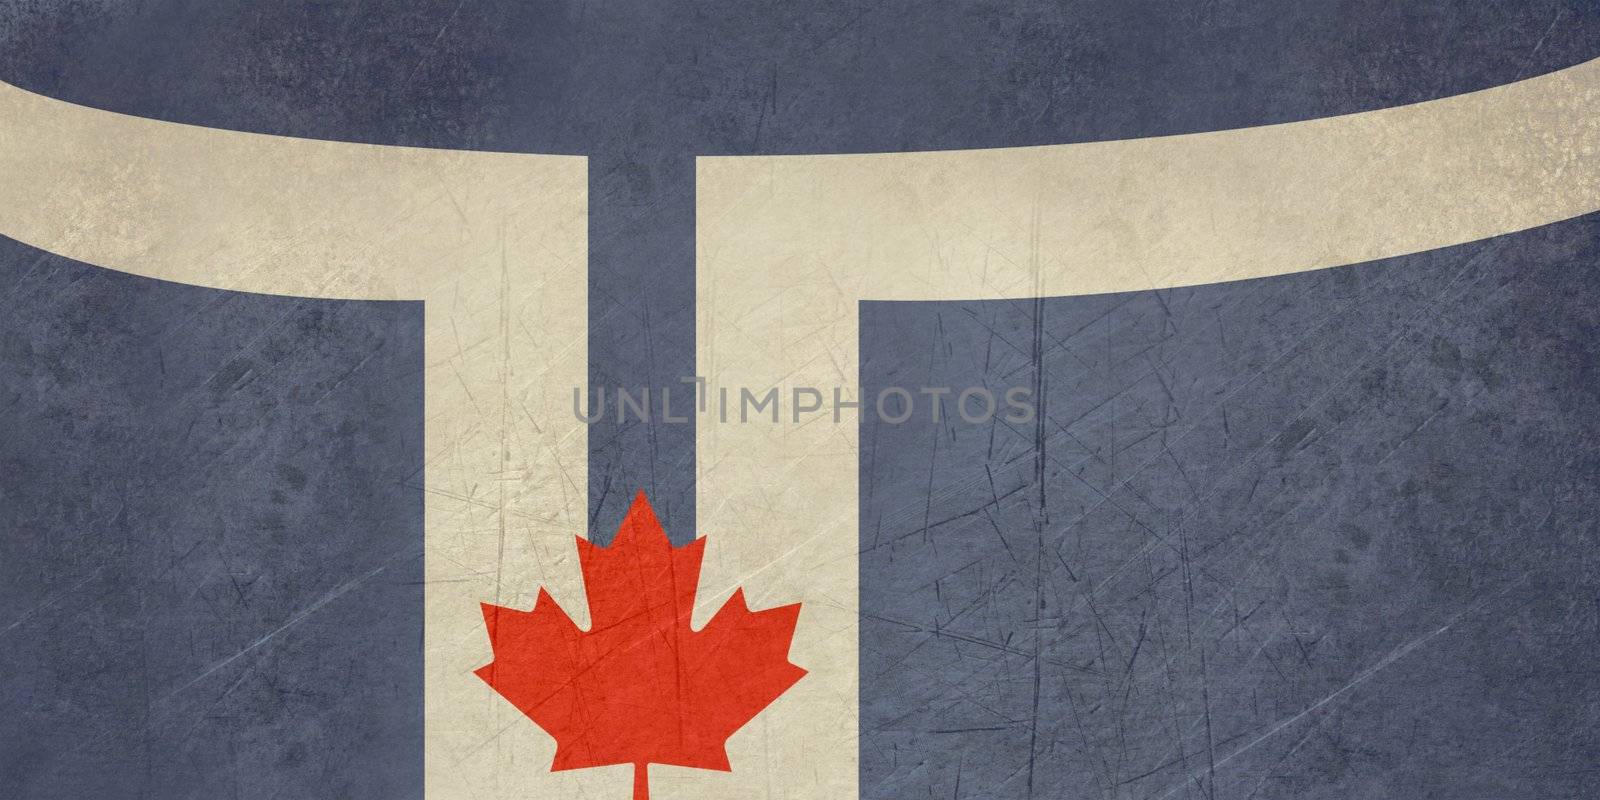 Grunge Toronto city flag by speedfighter